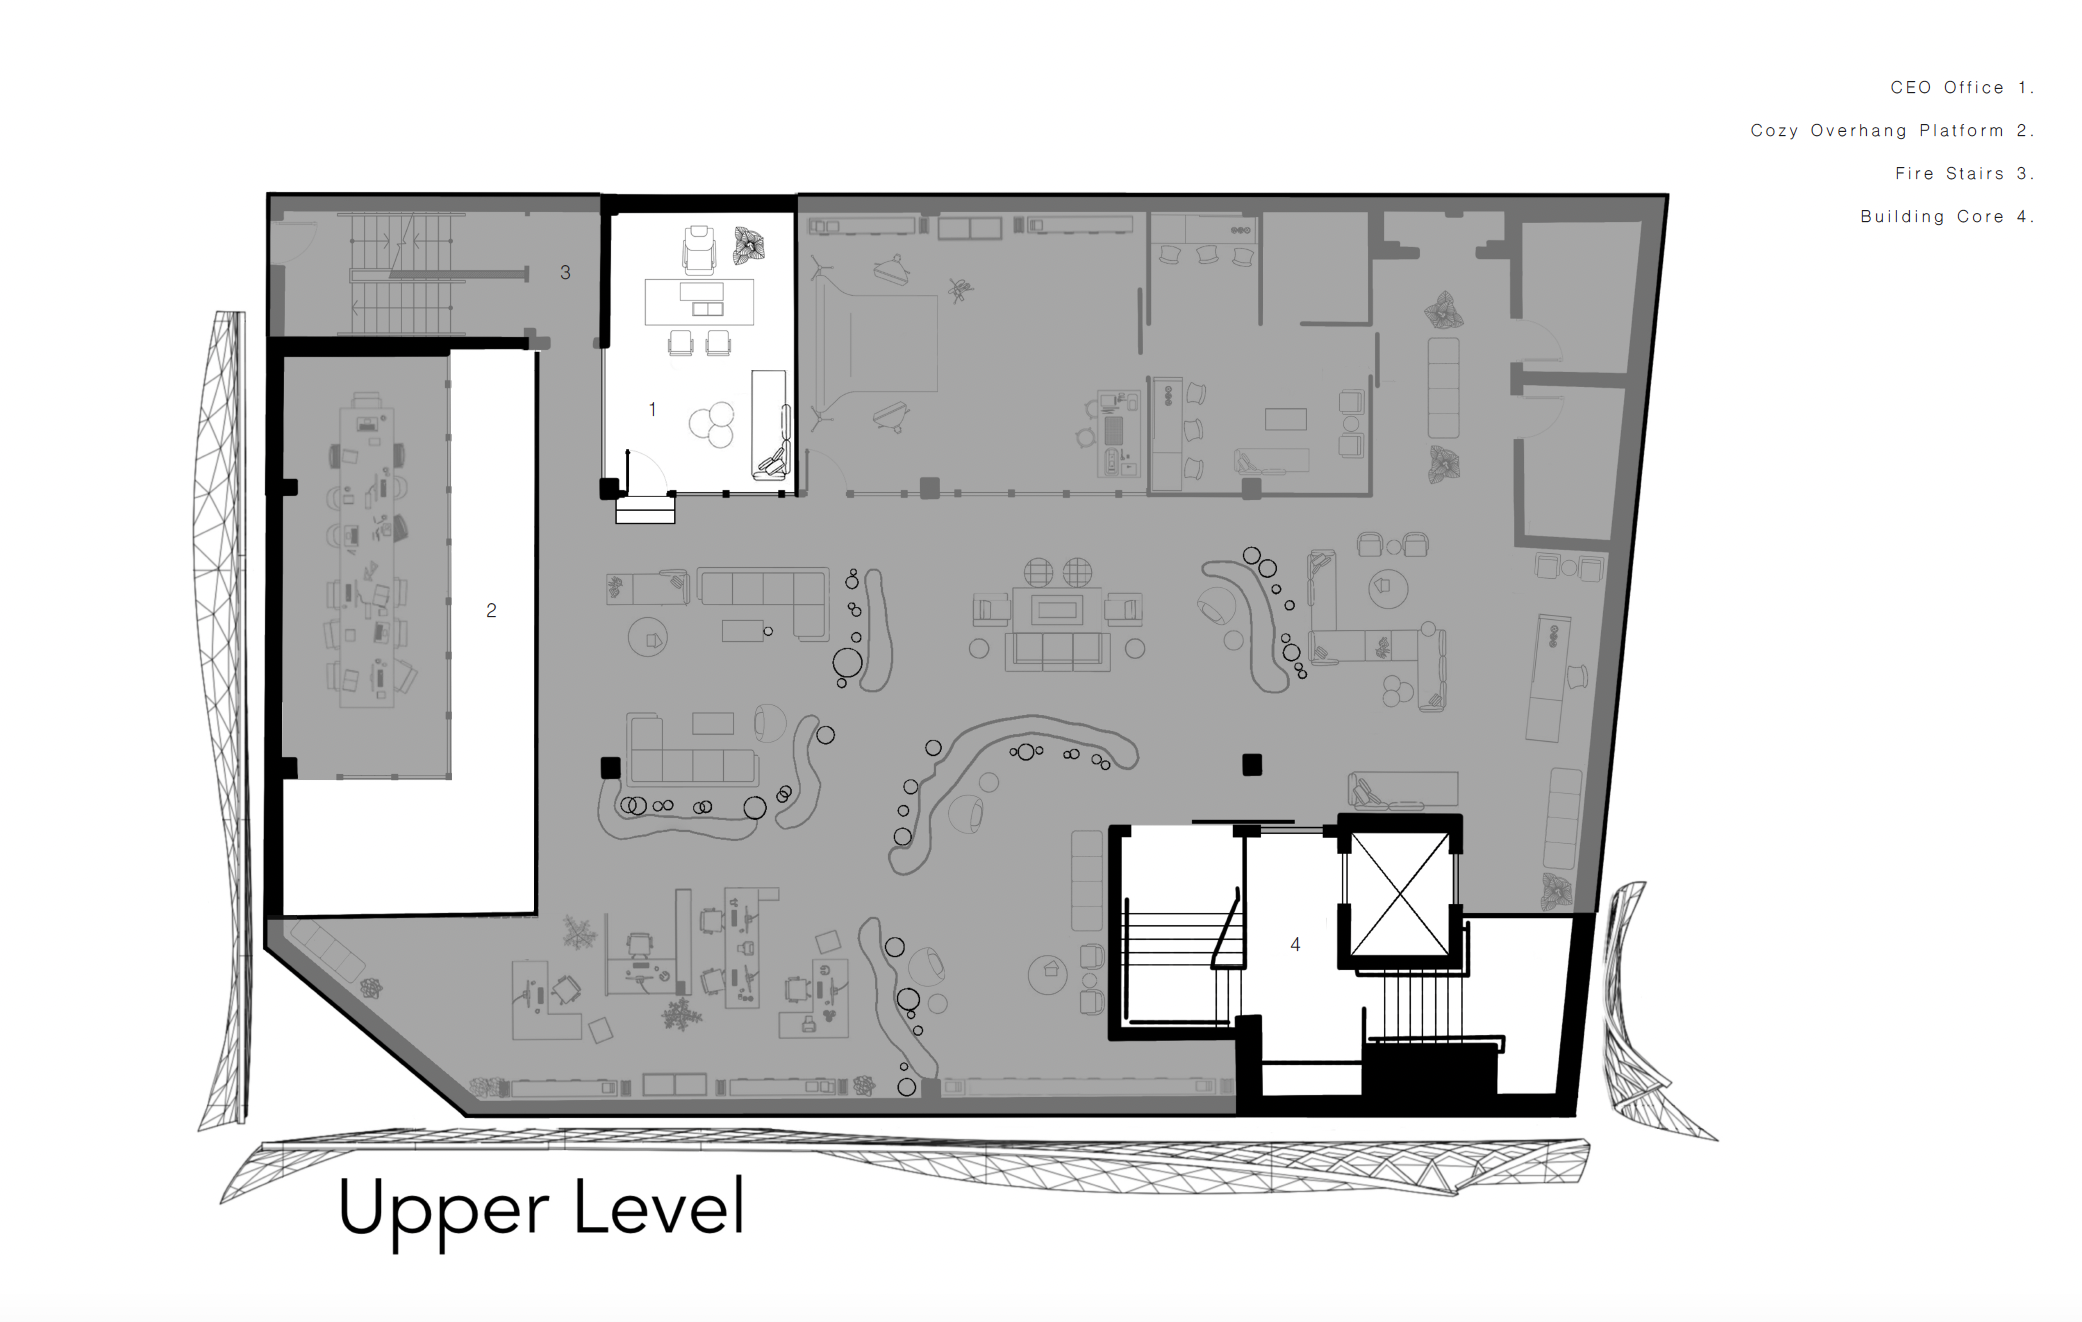 Upper Floor Plan (Multi-Level) (Amanda Stan/Justin Crowell)